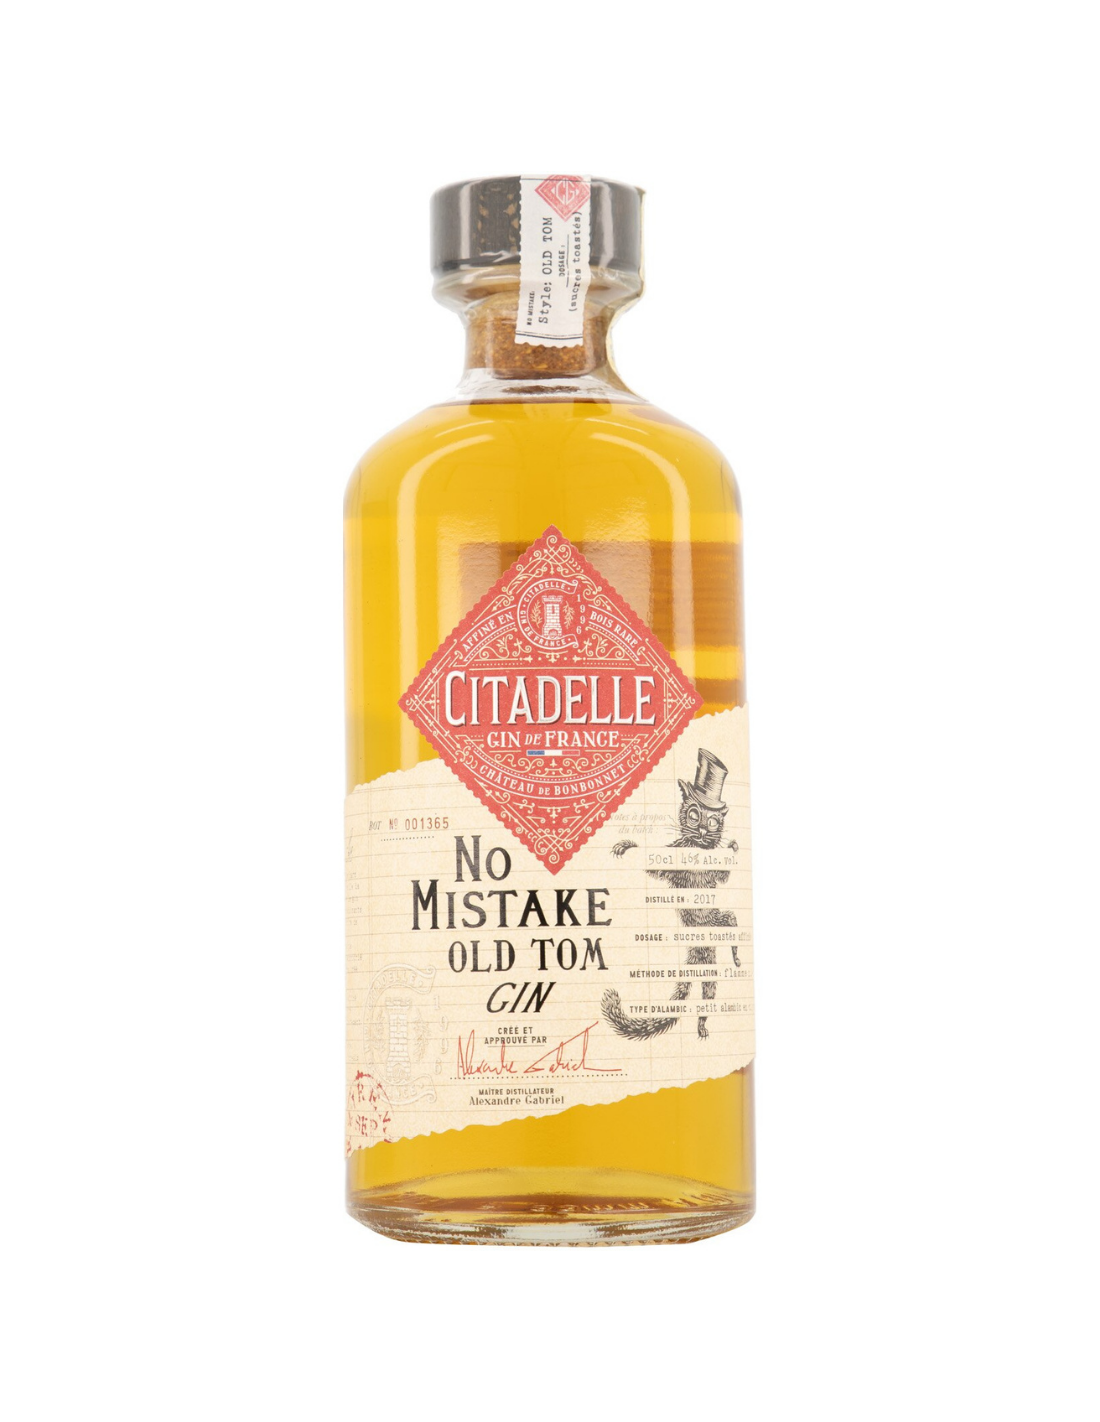 Gin Citadelle No Mistake Old Tom, 46% alc., 0.5L, Franta alcooldiscount.ro